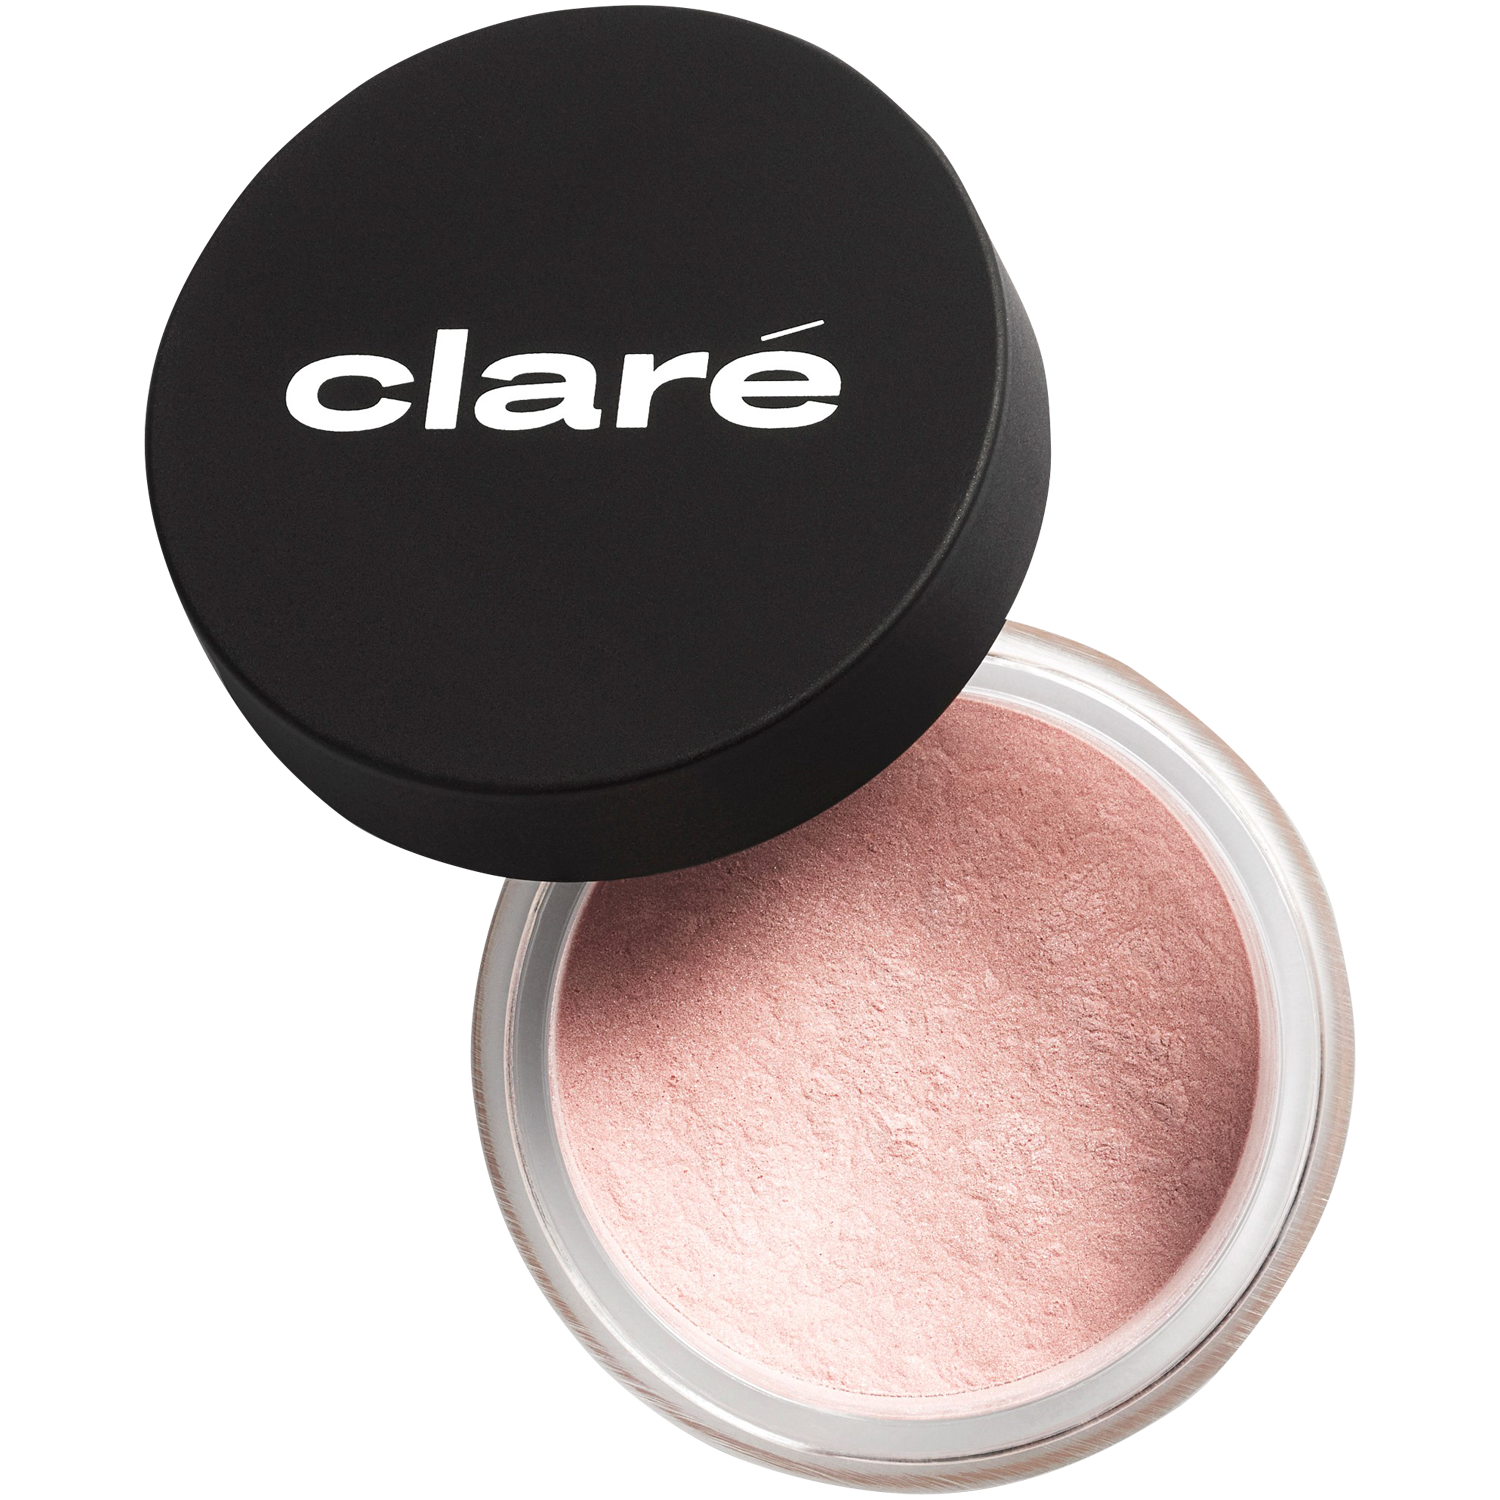 Атласные тени для век голые розовые 896 Claré Clare Makeup, 1 гр атласные тени для век холодного телесного цвета 900 claré clare makeup 1 гр